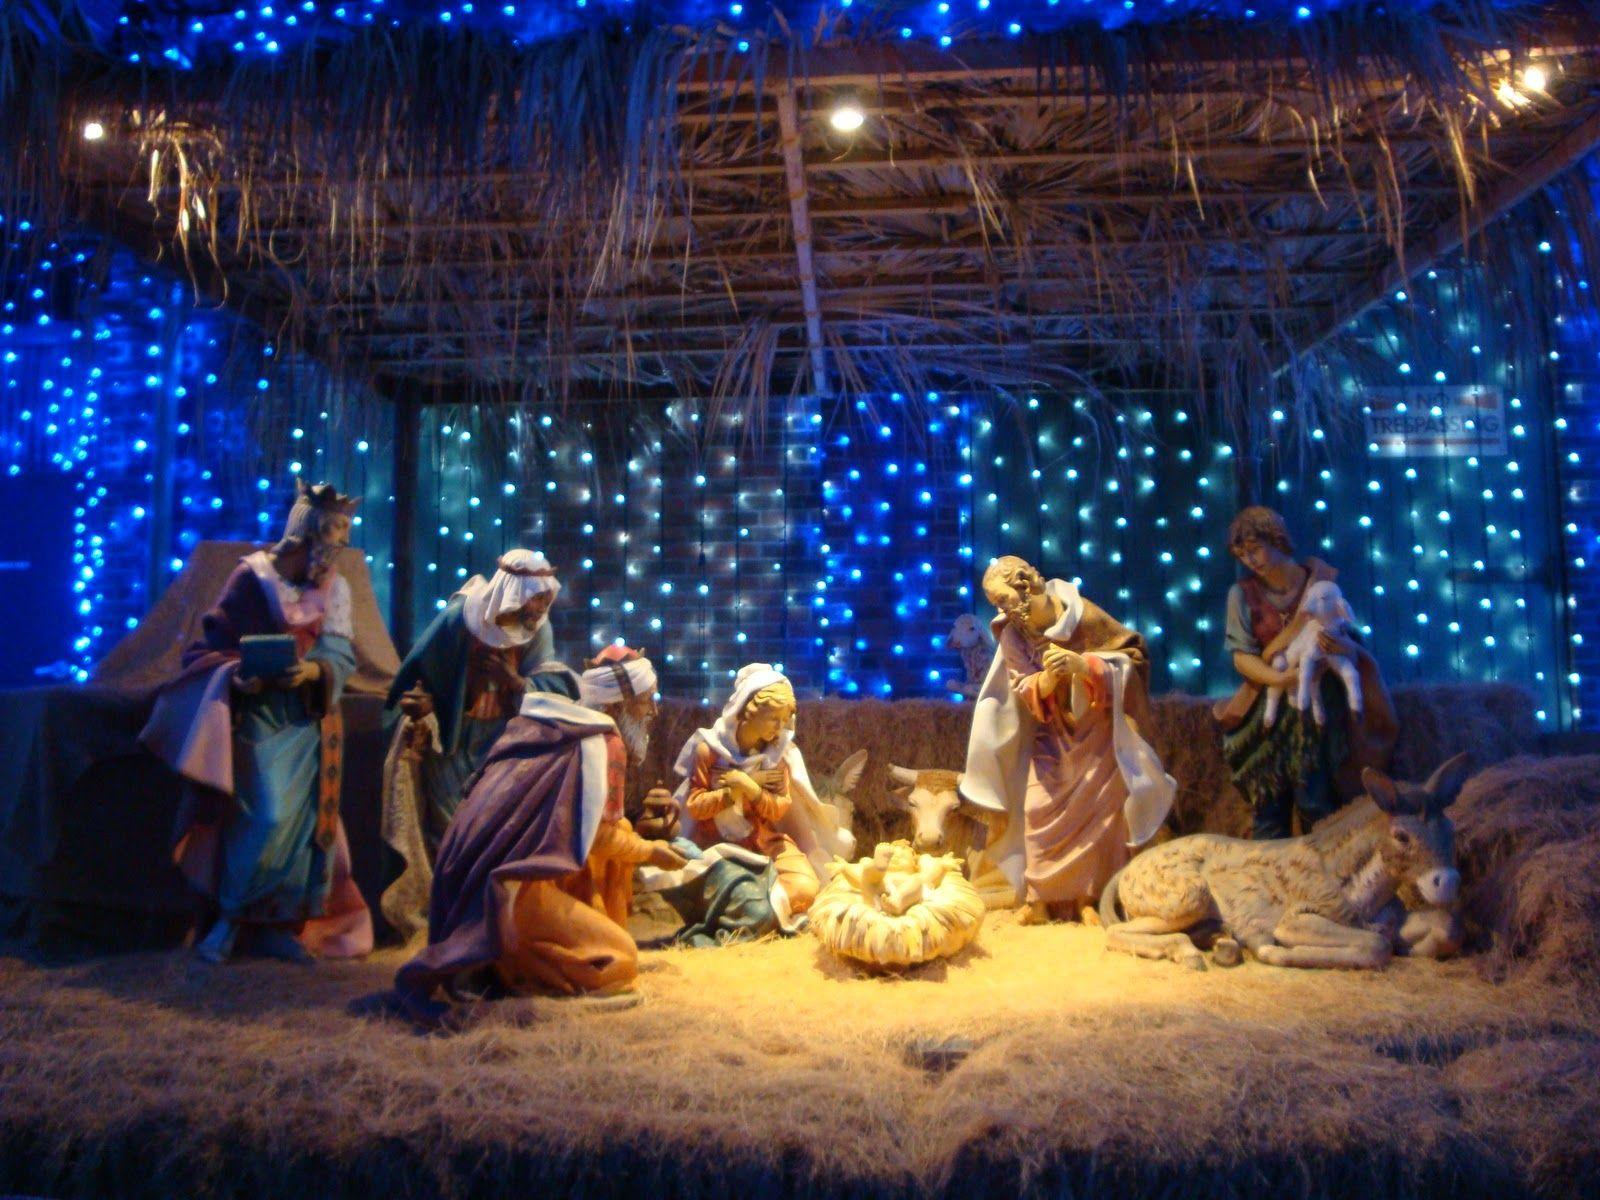 Merry Christmas Nativity Scene. The Nativity Scene at